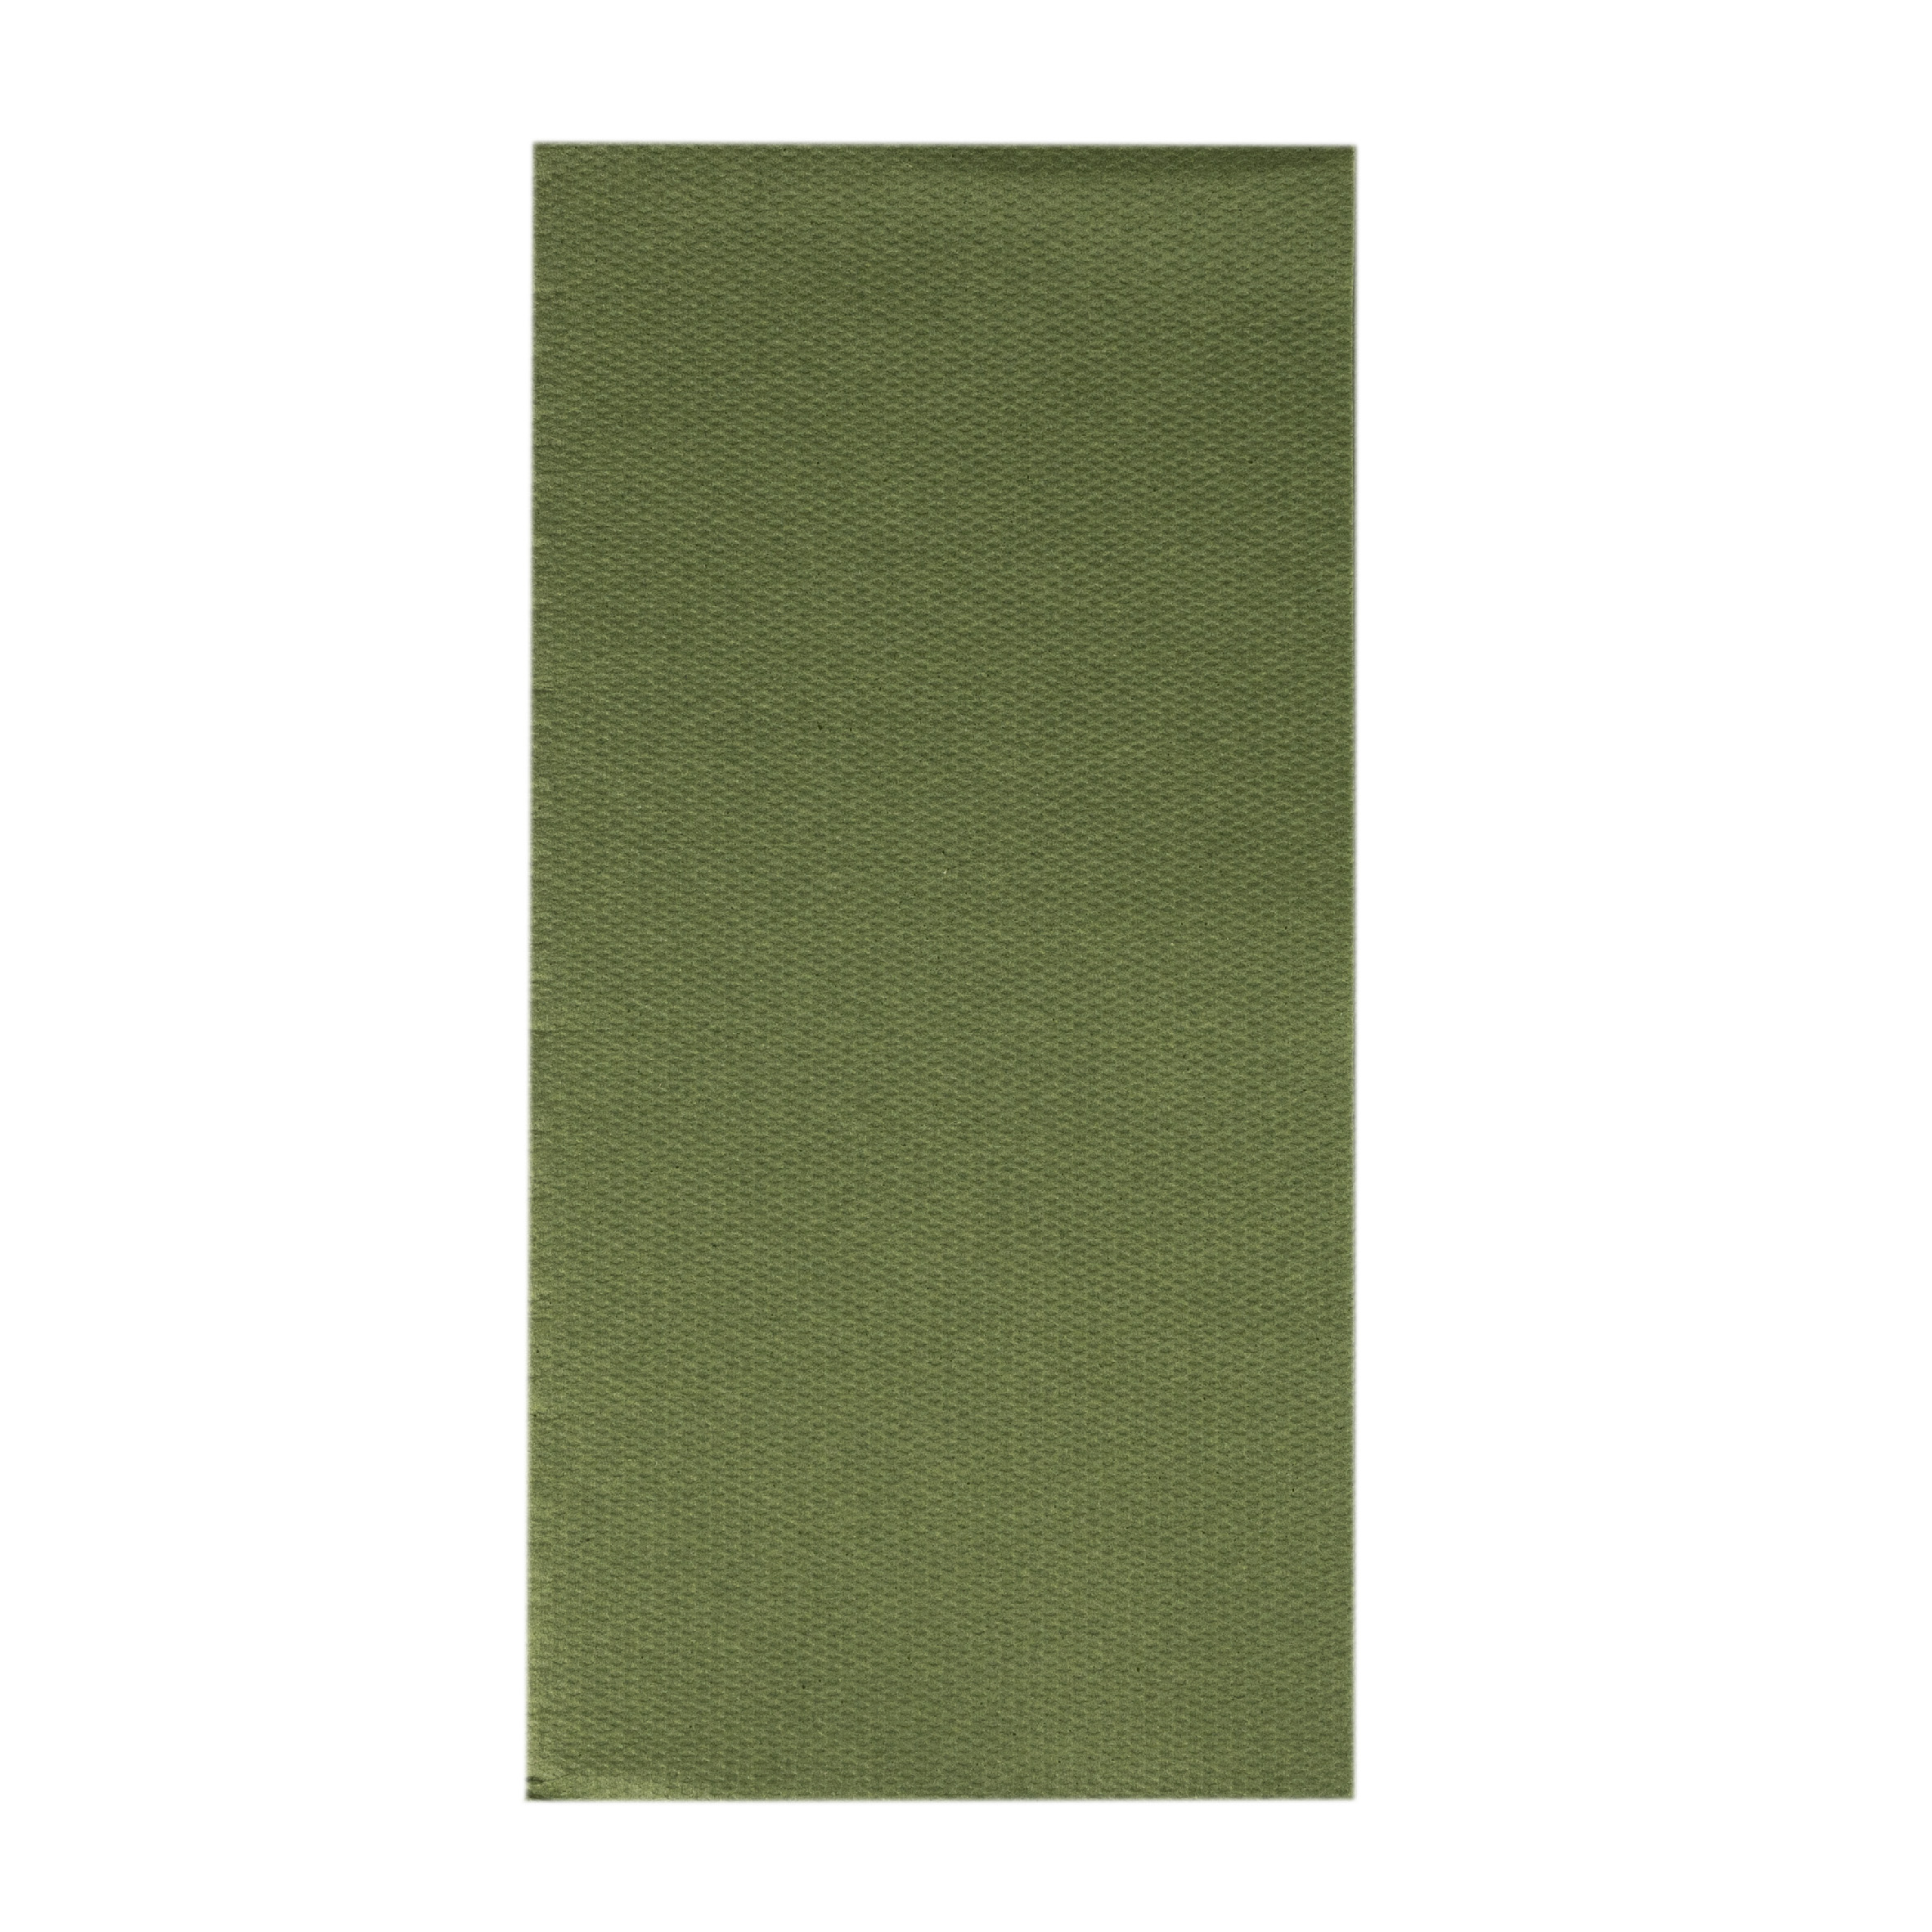 Mank Serviette Softpoint 1/8 Falz, 40 x 40 cm, Basic oliv